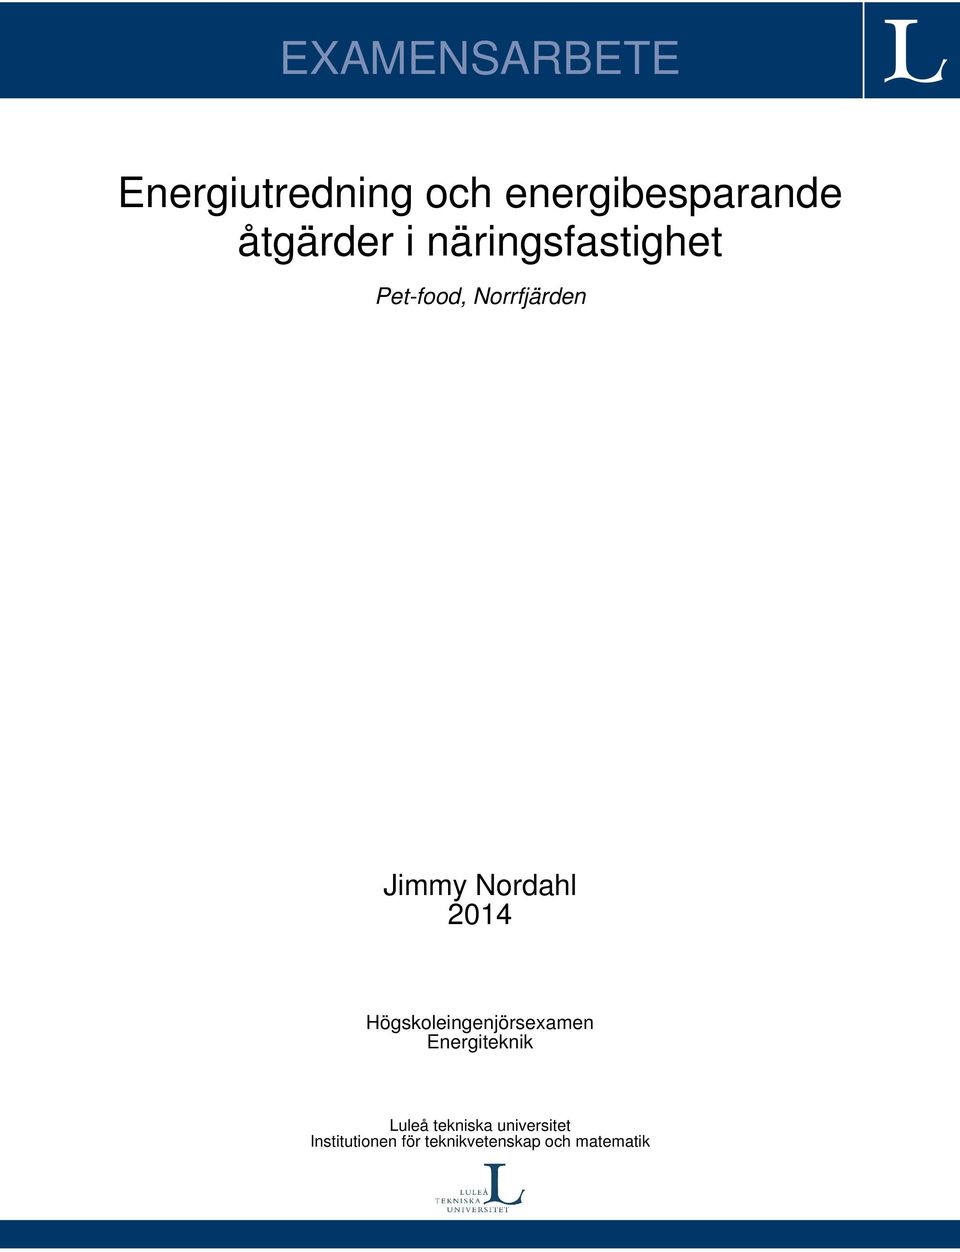 Nordahl 2014 Högskoleingenjörsexamen Energiteknik Luleå